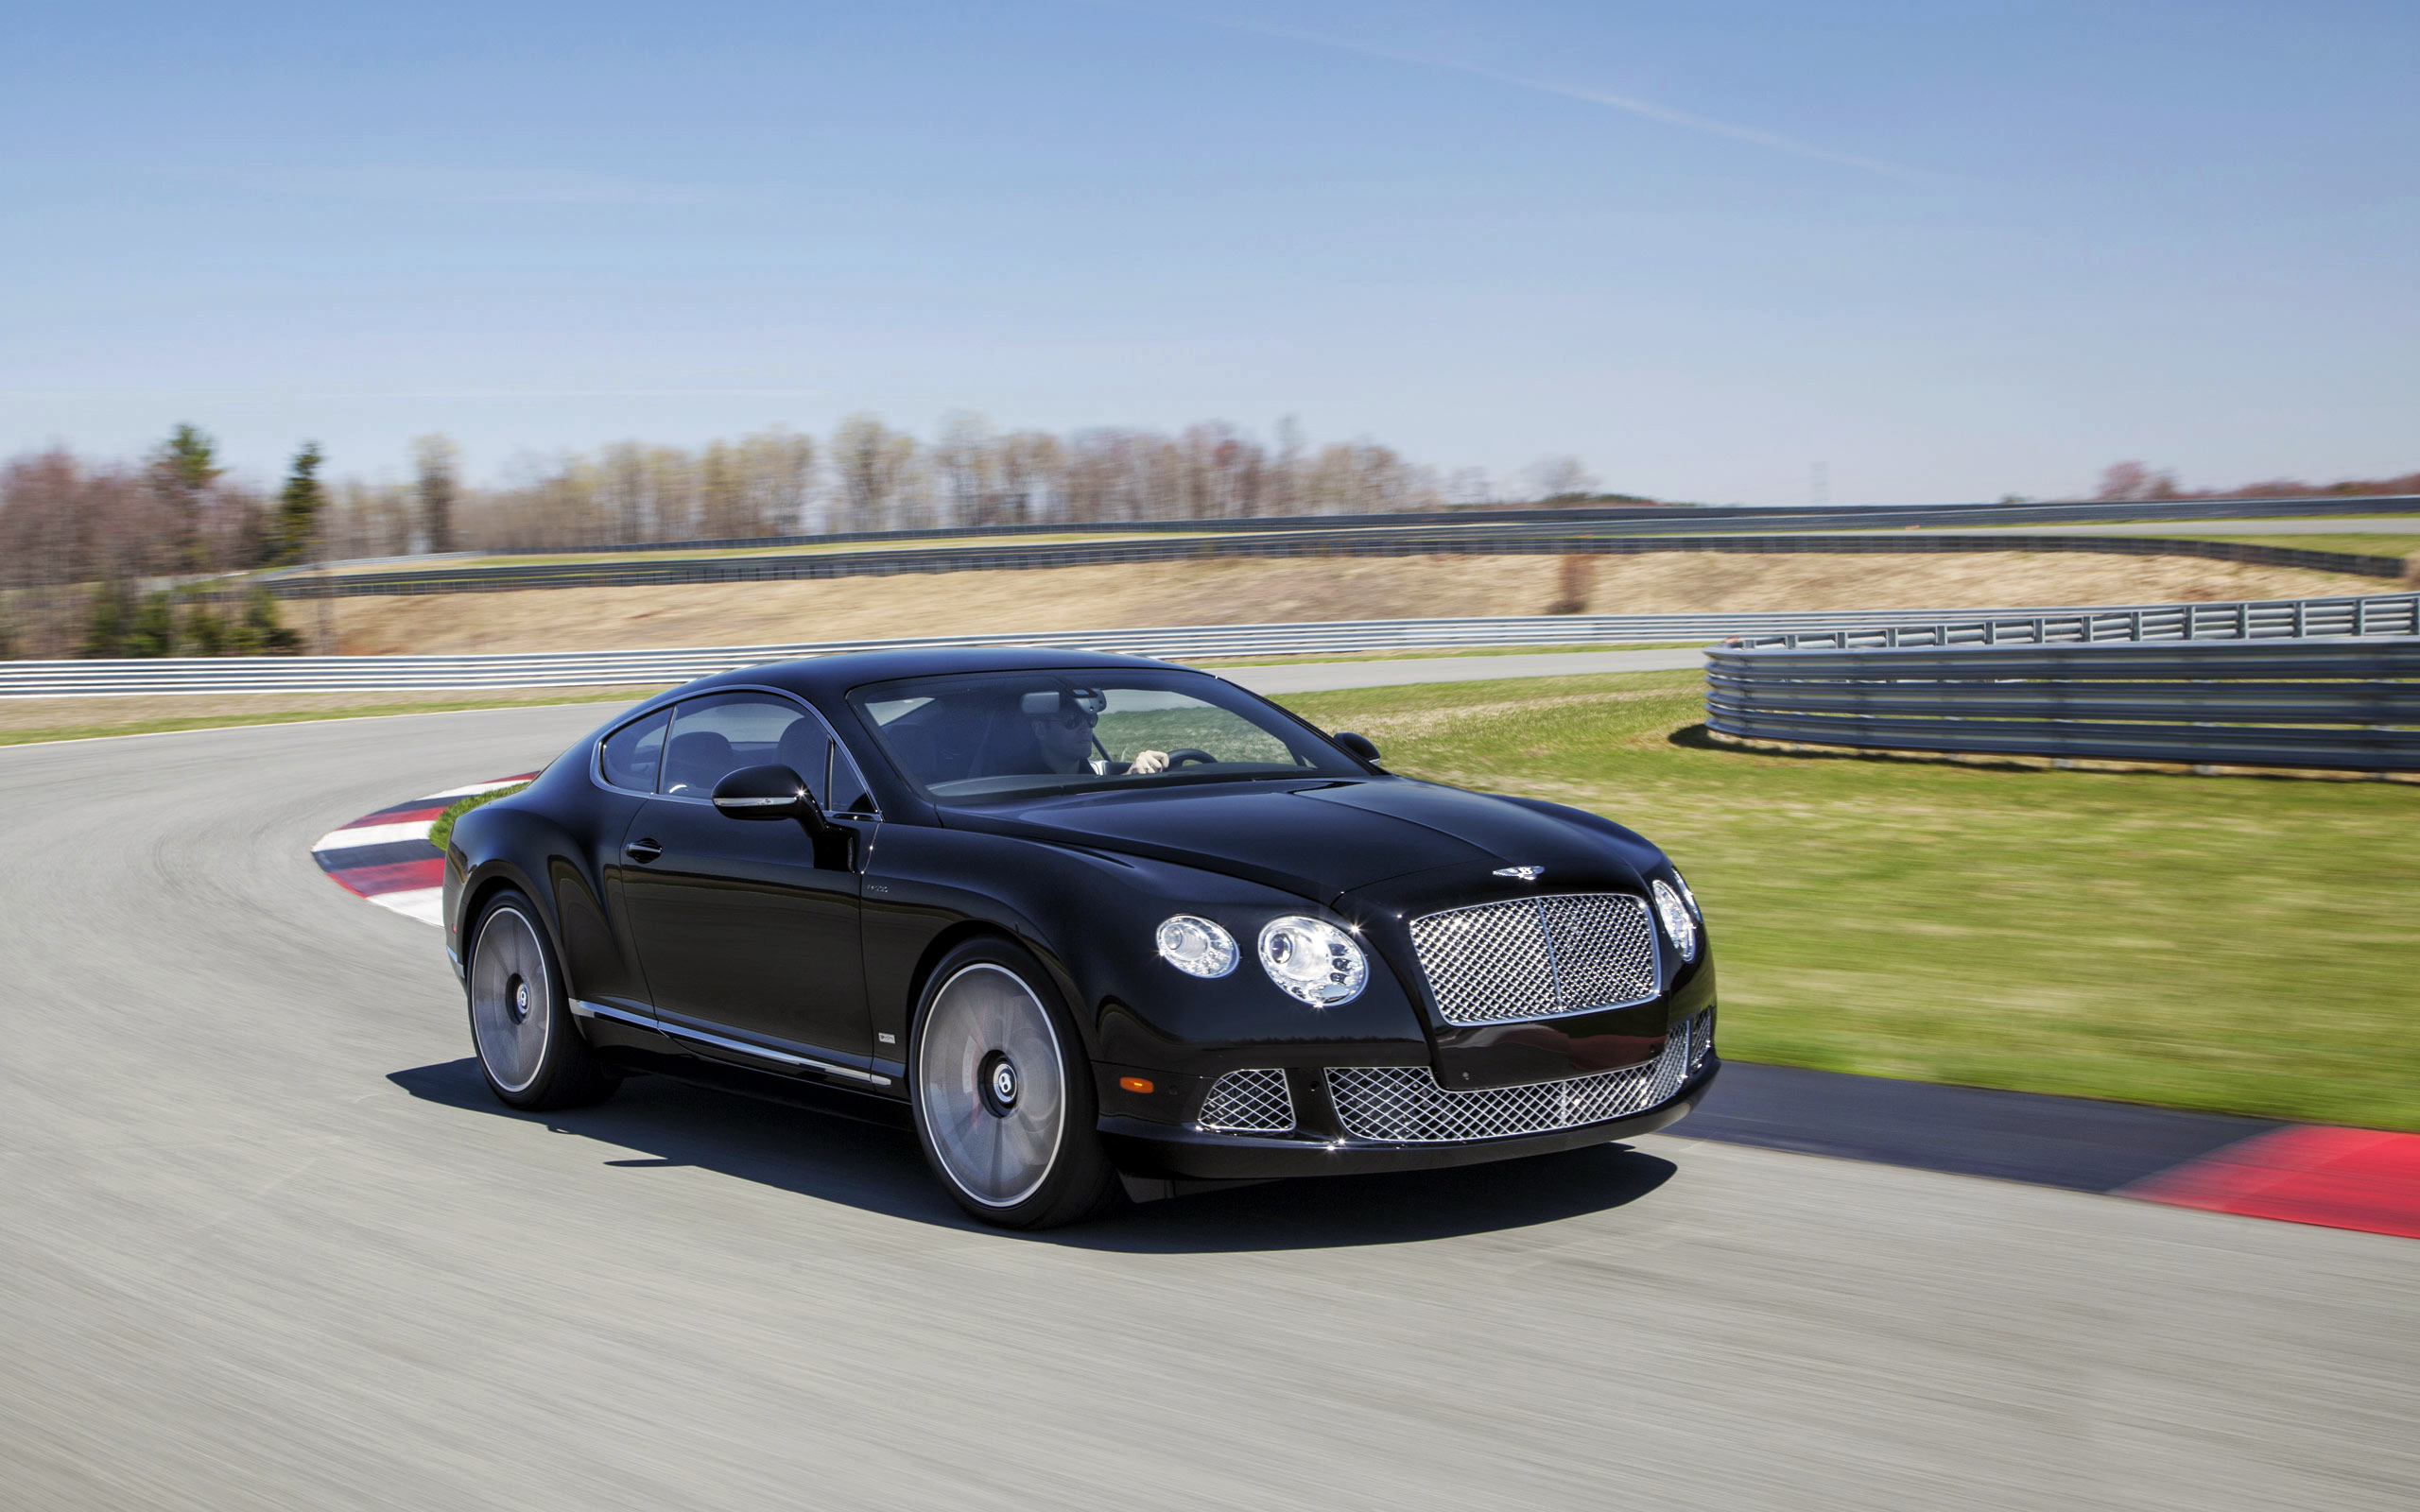 Baixe gratuitamente a imagem Bentley, Carro, Bentley Continental Gt, Veículos, Carro Preto, Bentley Continental na área de trabalho do seu PC